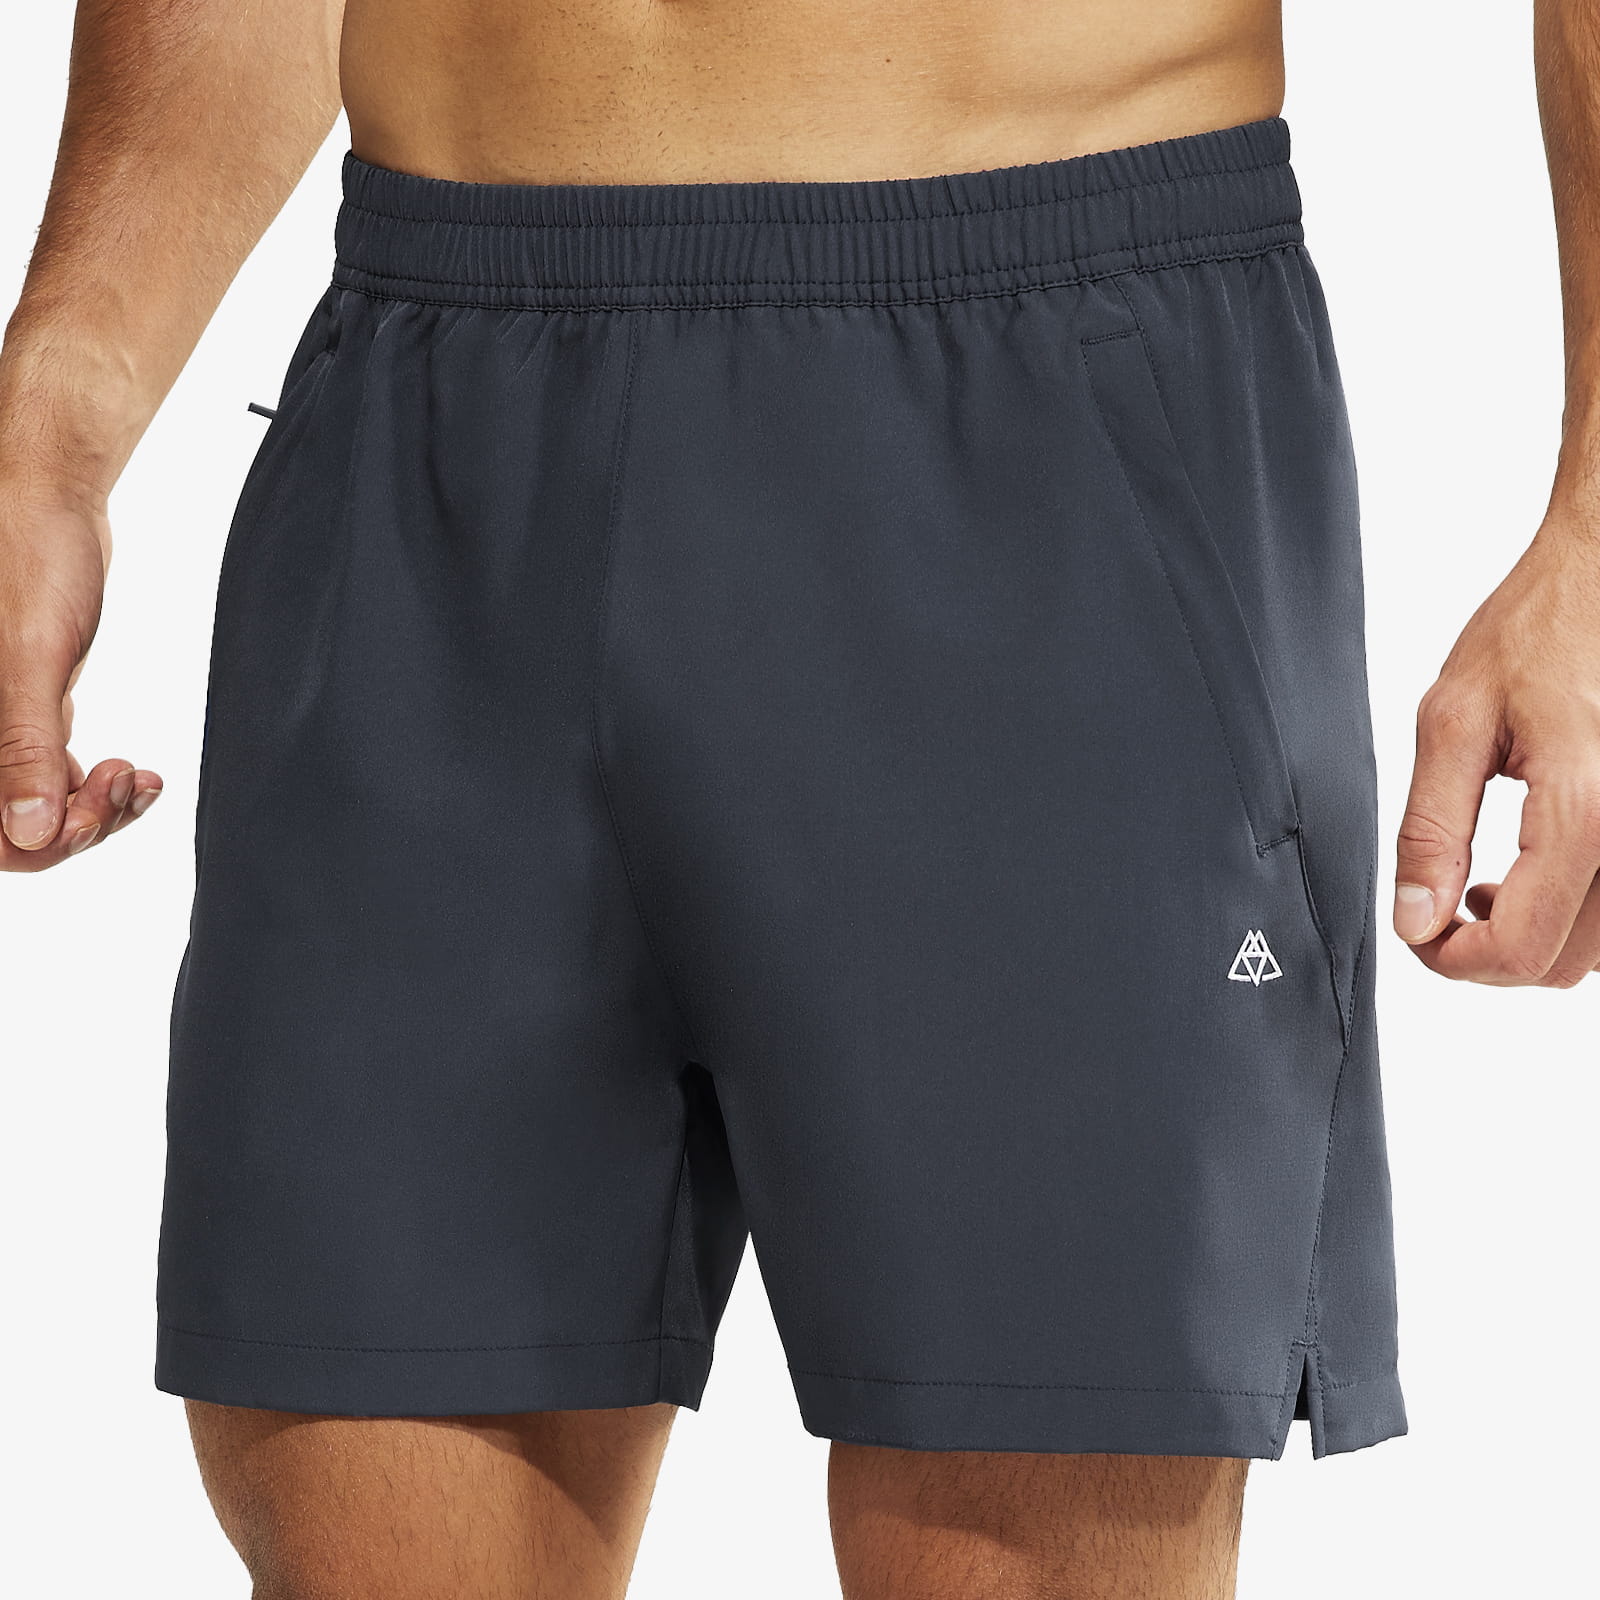 Haimont Men's 5-Inch Workout Running Shorts with Zipper Pockets, Dark Grey / XS